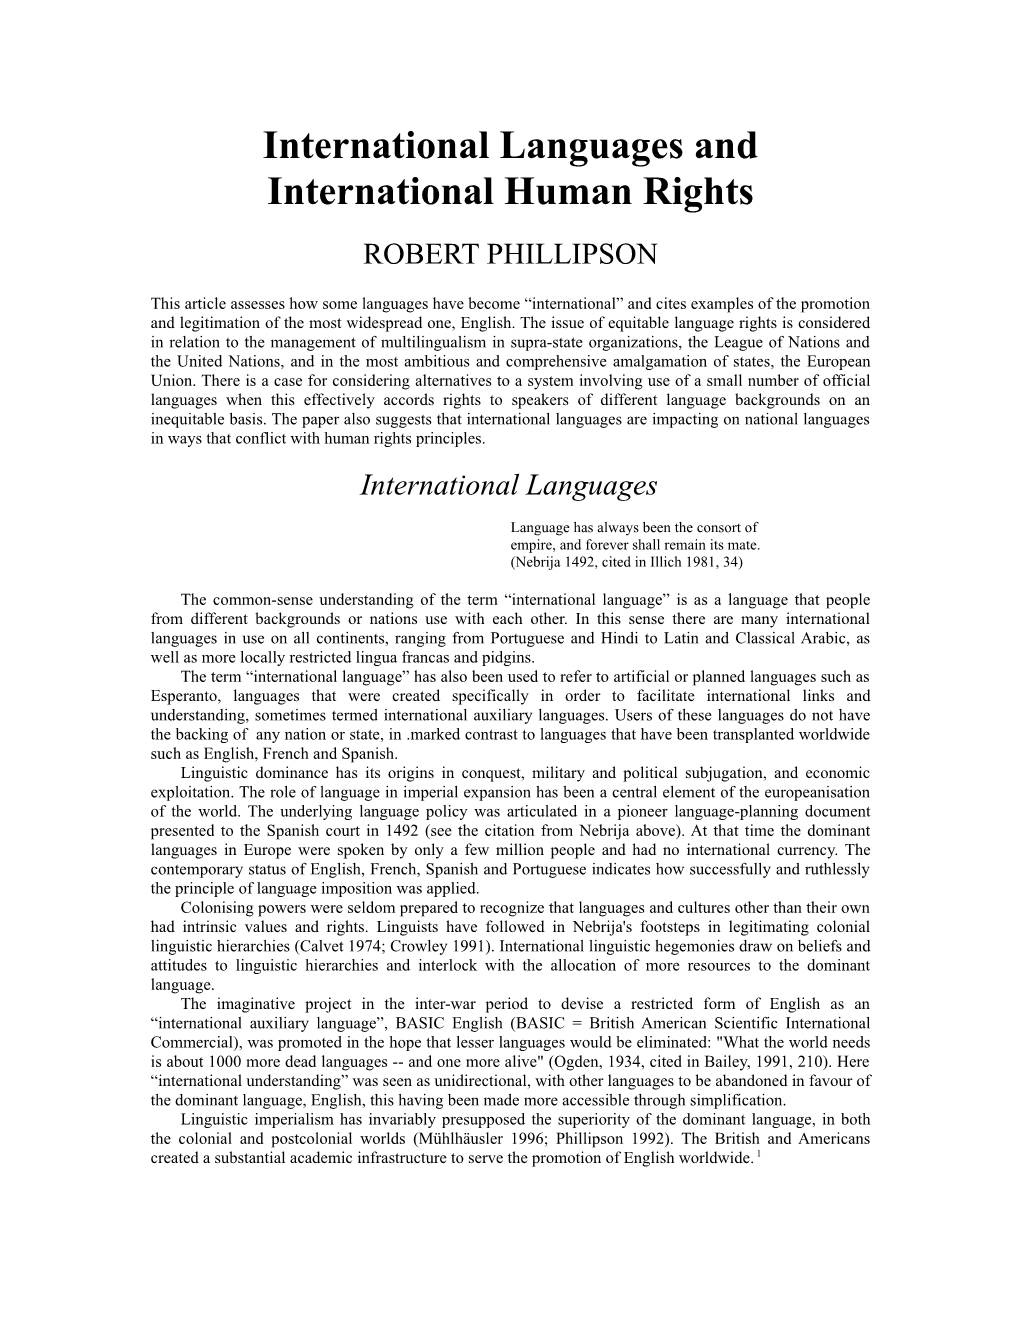 International Languages and International Human Rights ROBERT PHILLIPSON